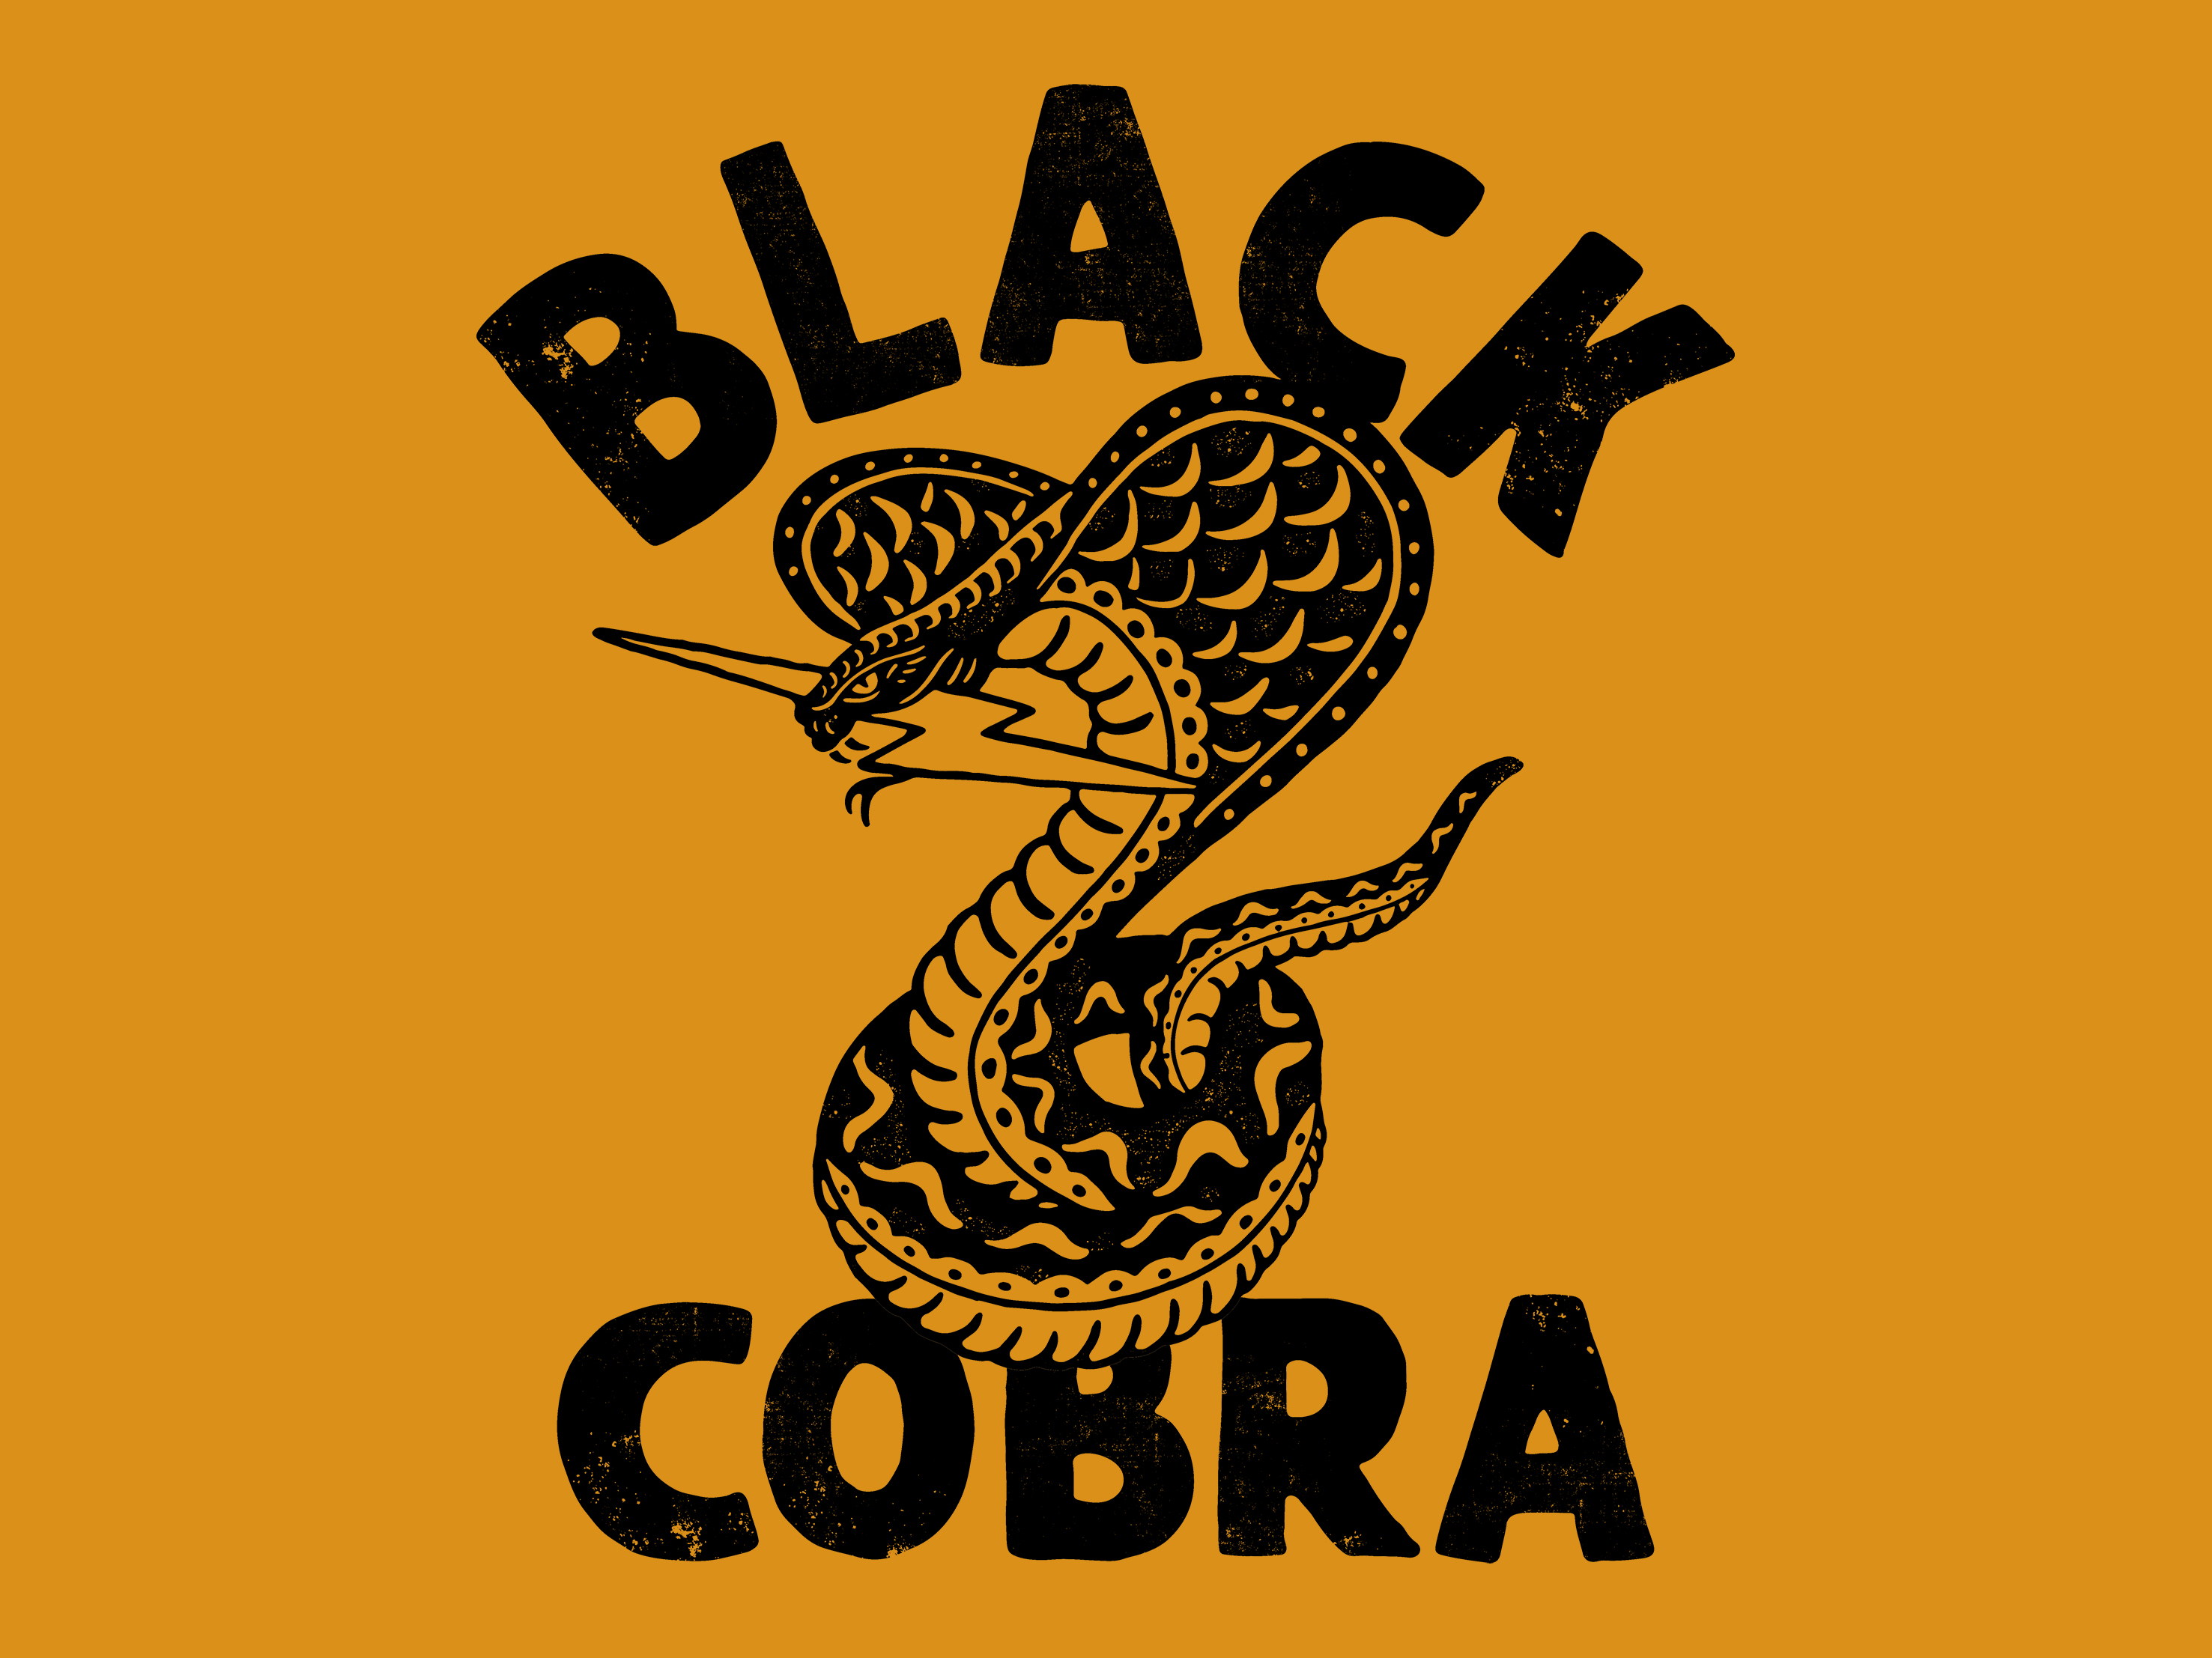 Cobra monochrome logo on a dark background Vector Image